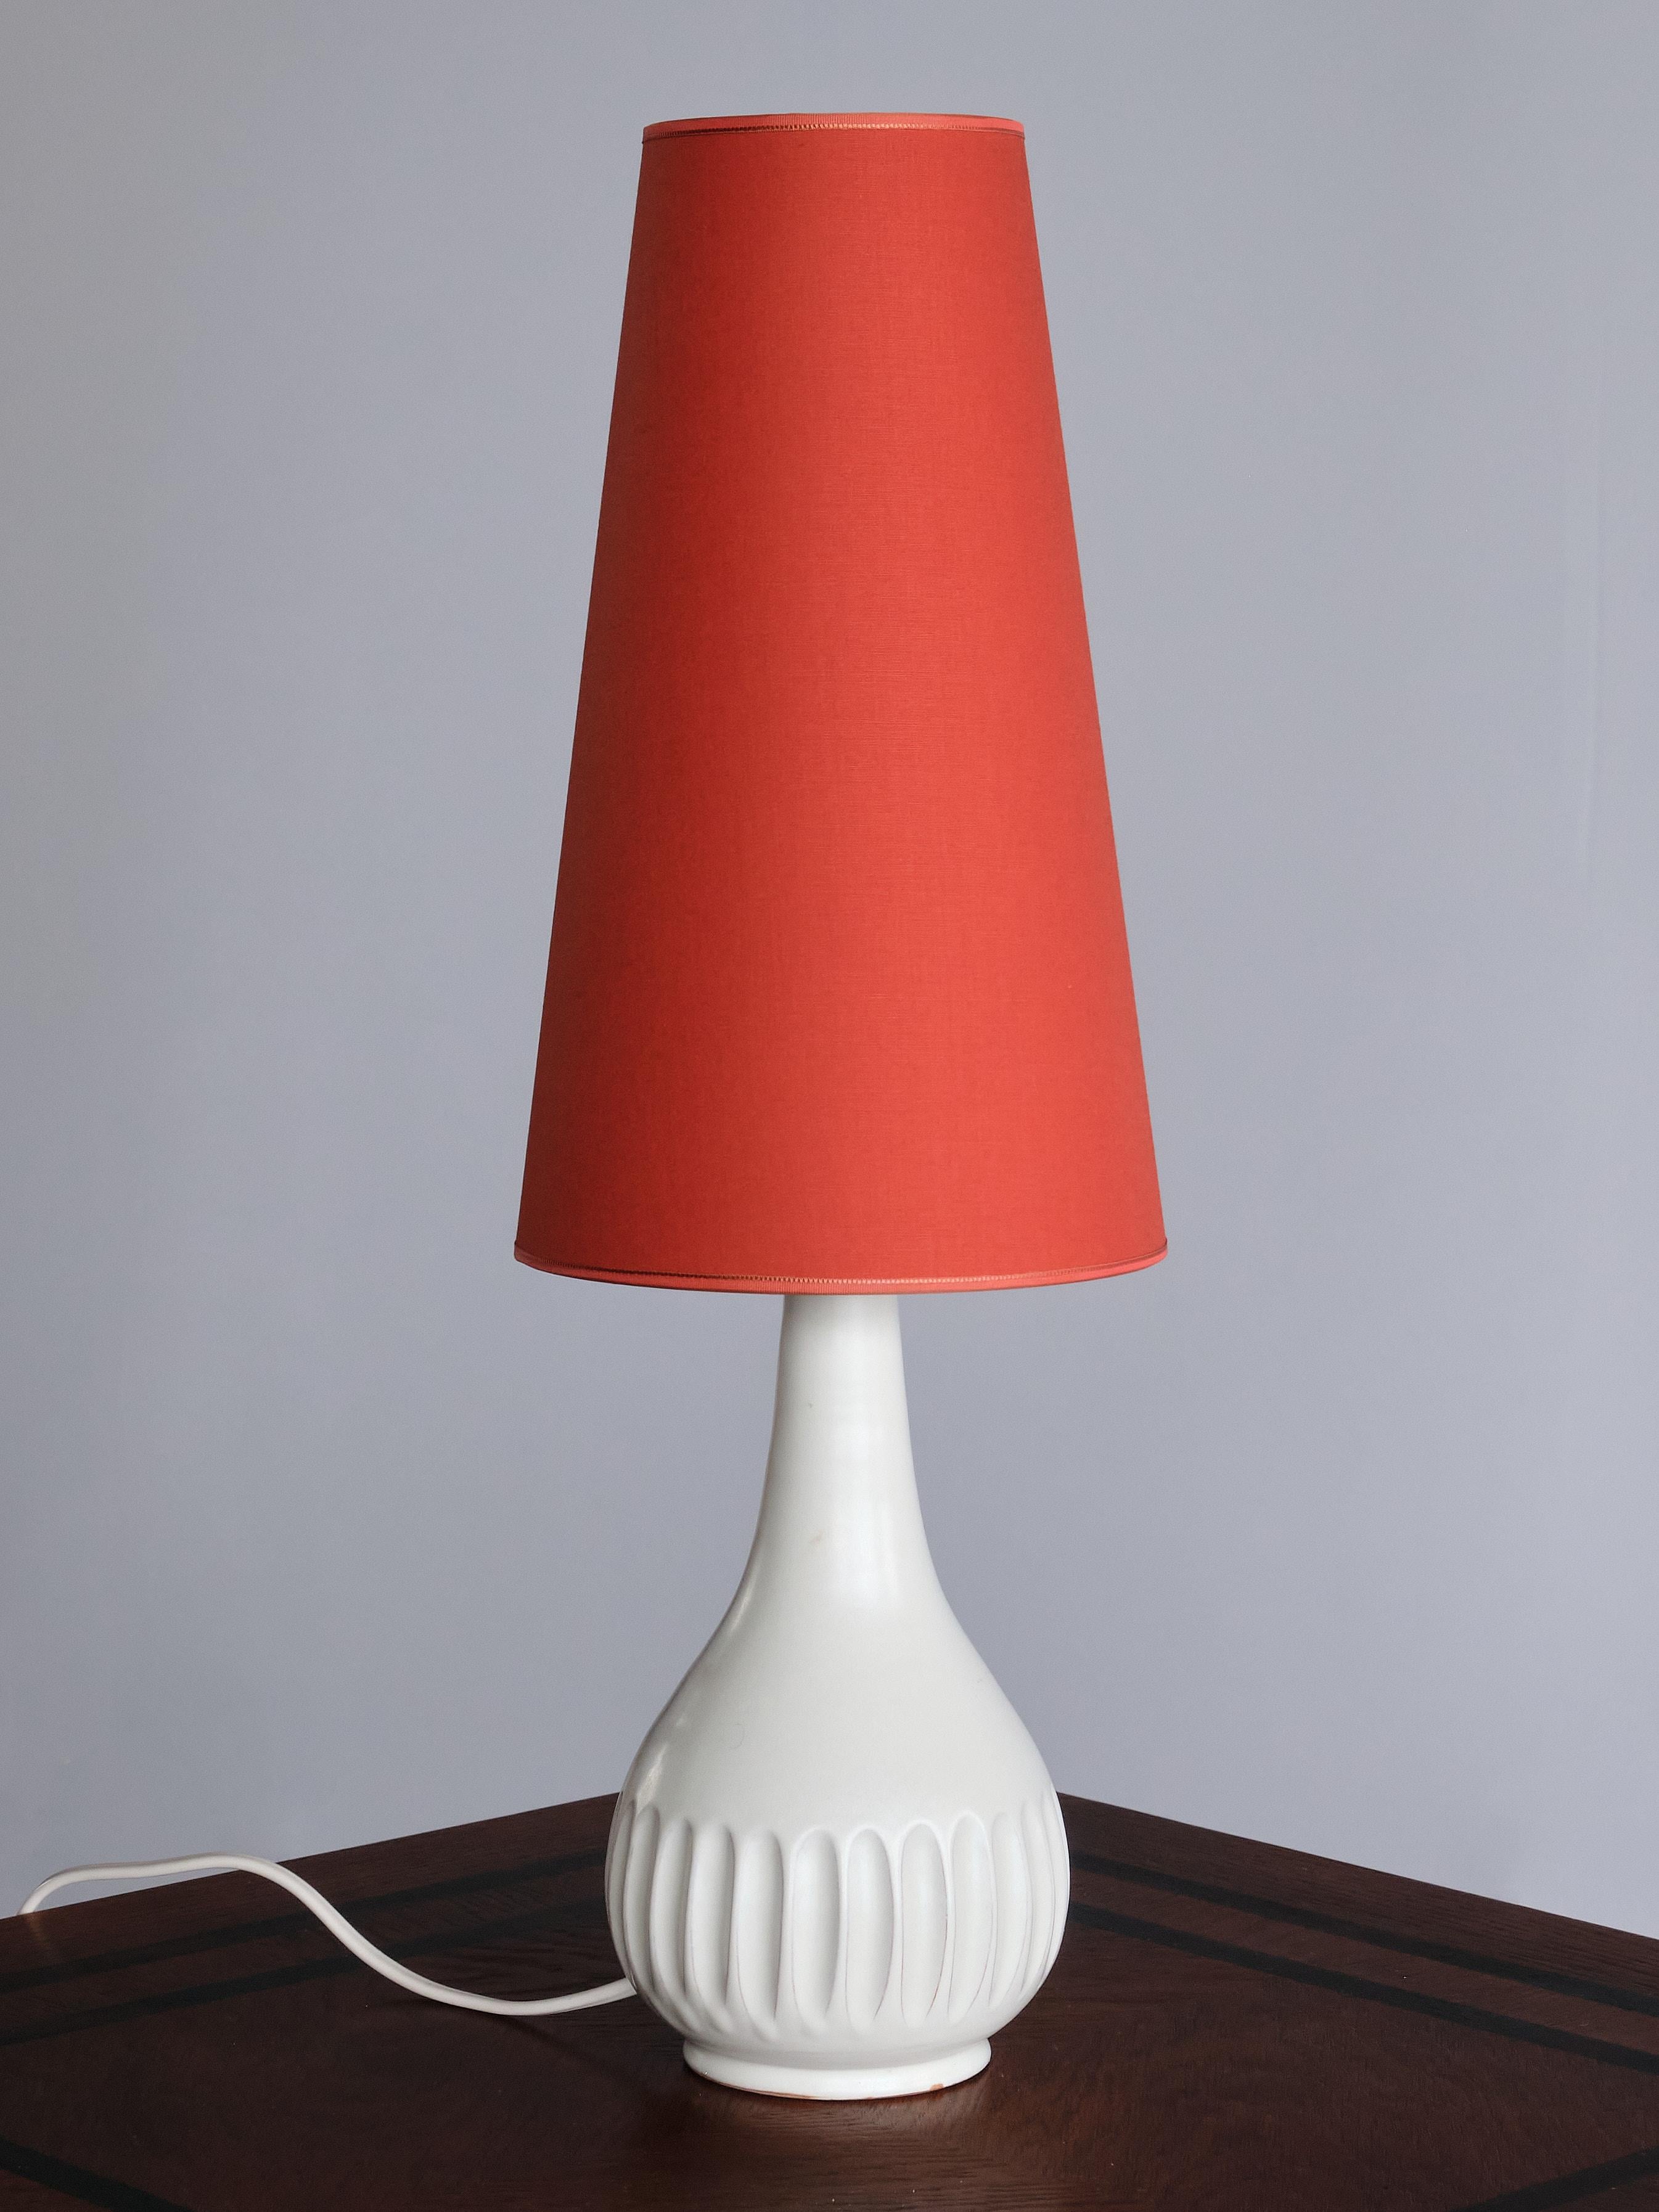 Anna-Lisa Thomson Ceramic Table Lamp, Upsala-Ekeby, Swedish Modern, 1940s For Sale 4